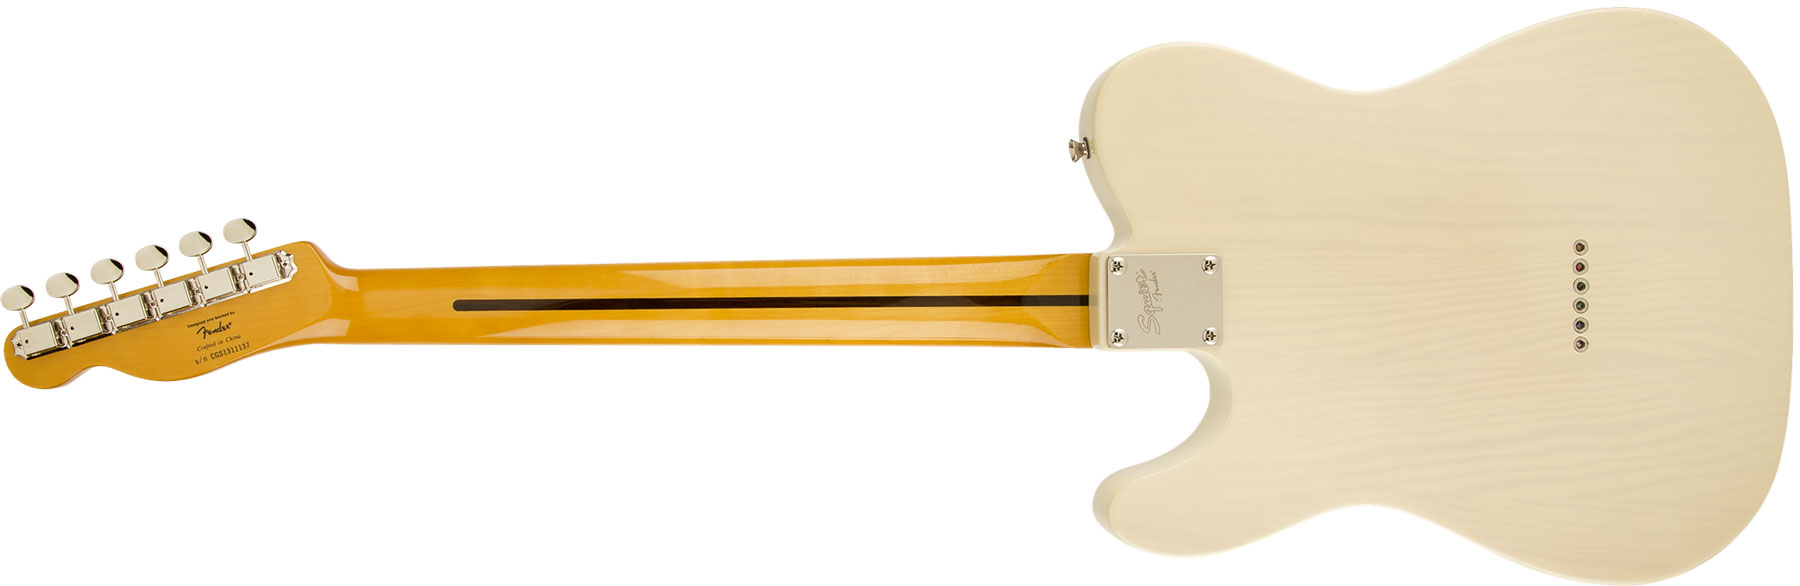 Squier Classic Vibe Telecaster '50s Mn - Vintage Blonde - E-Gitarre in Teleform - Variation 1